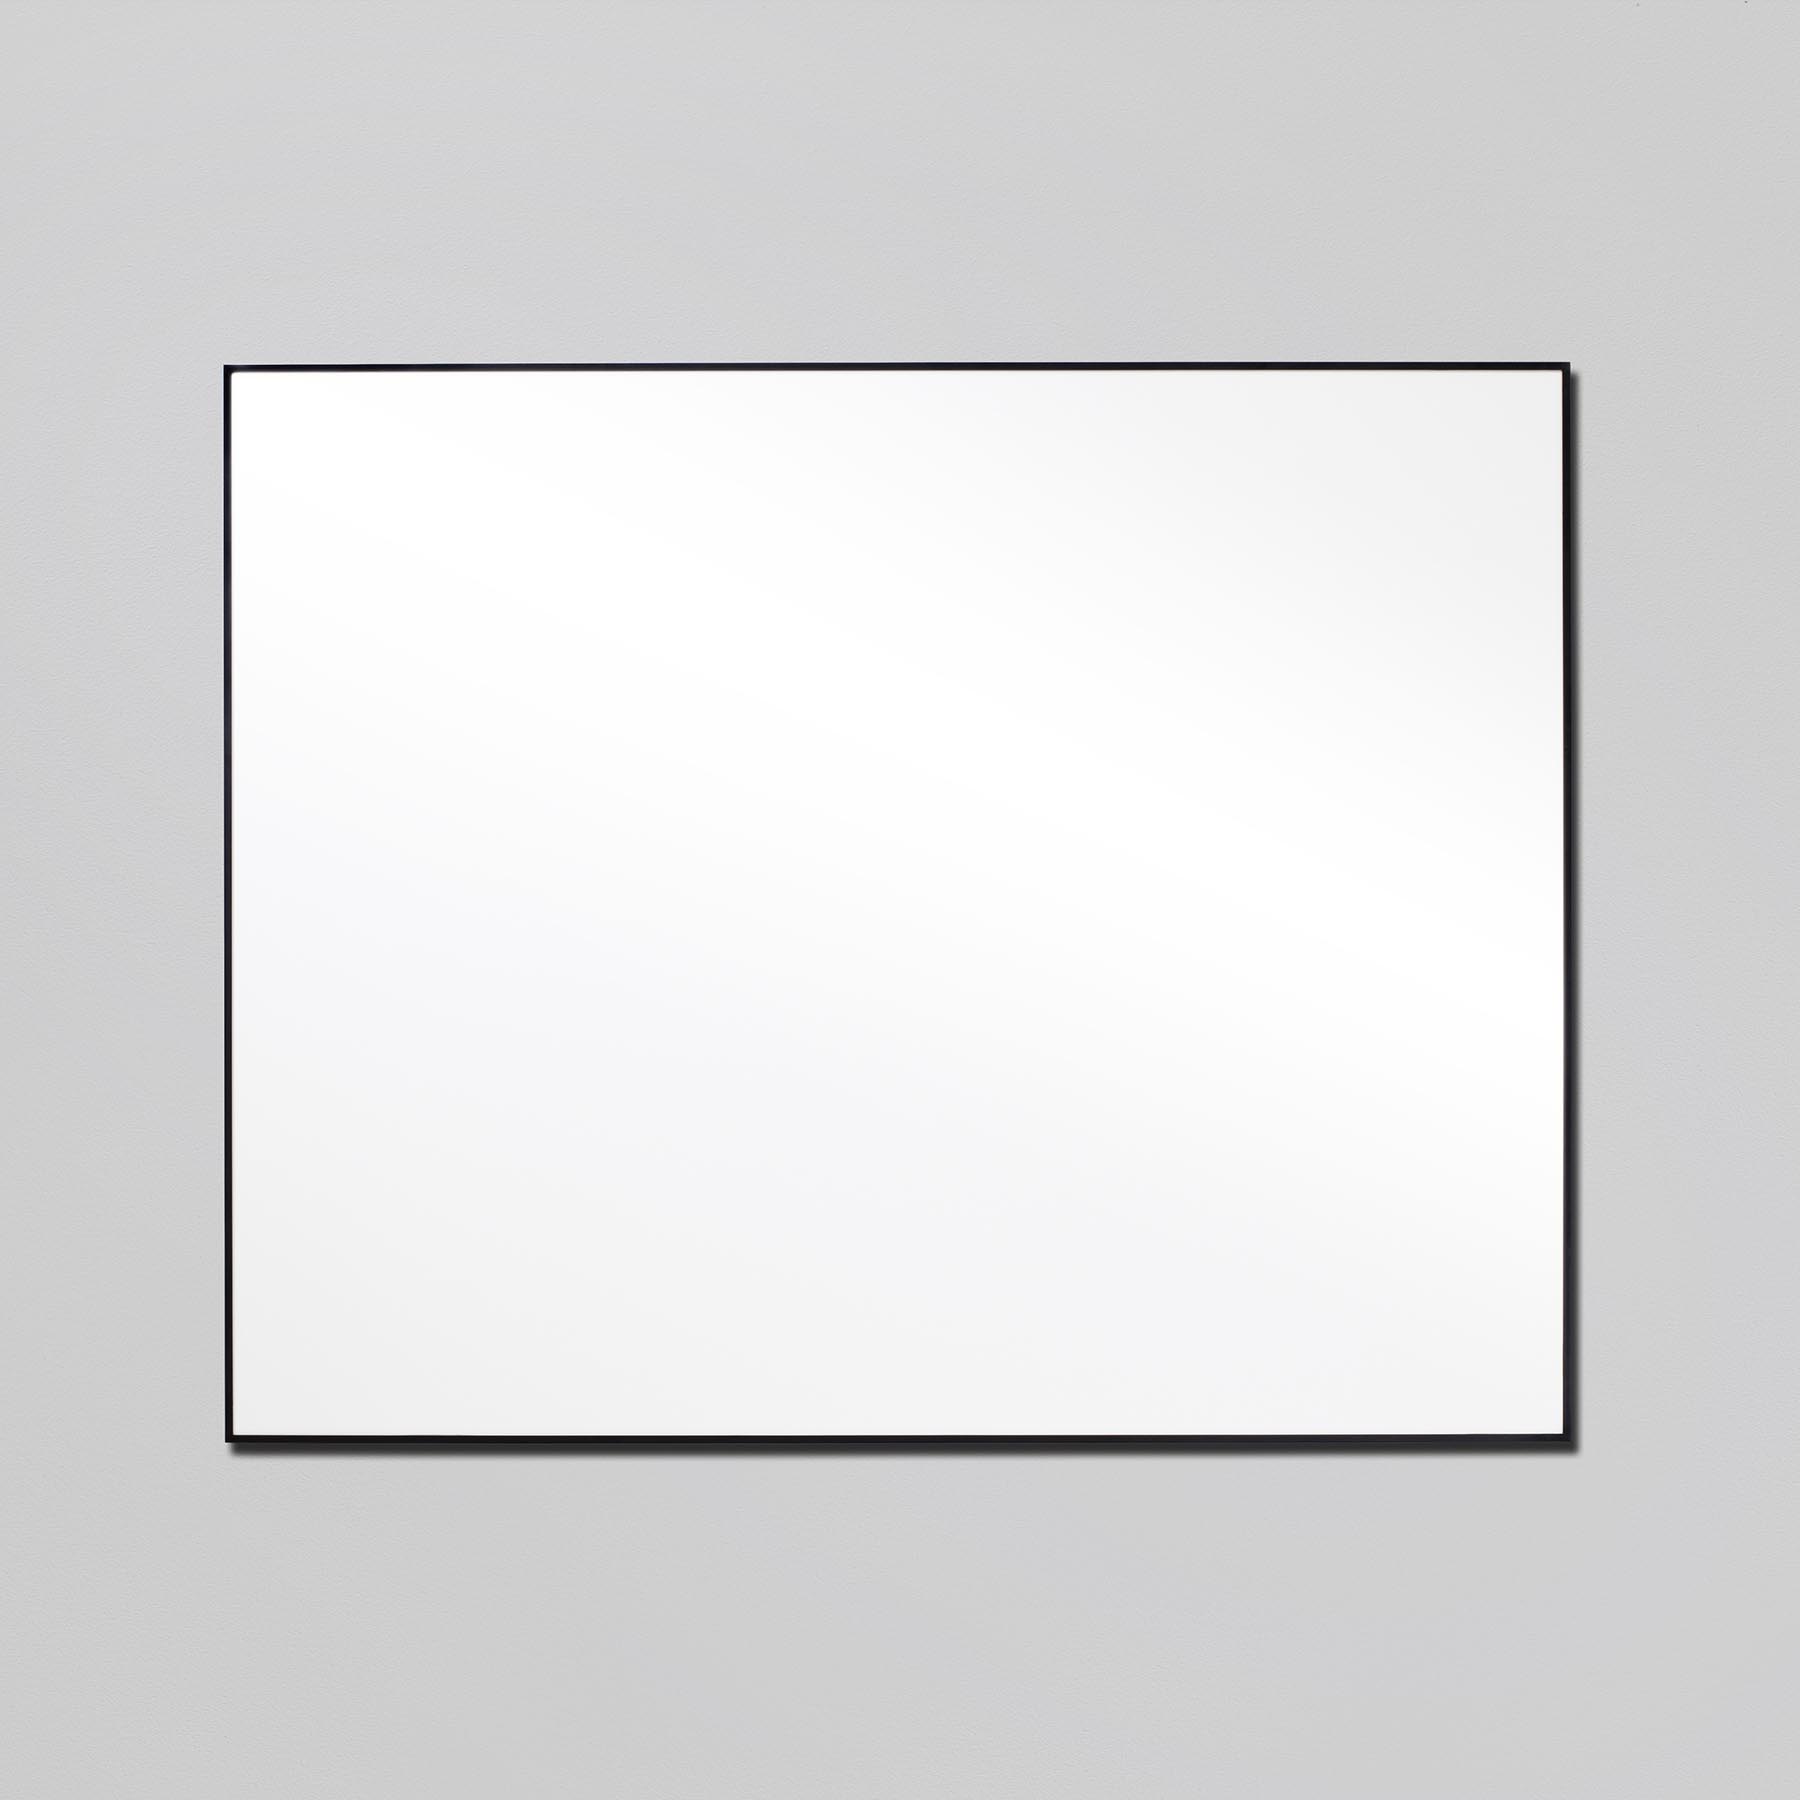 Lintex ONE Single-sided mobile whiteboard - PATboard